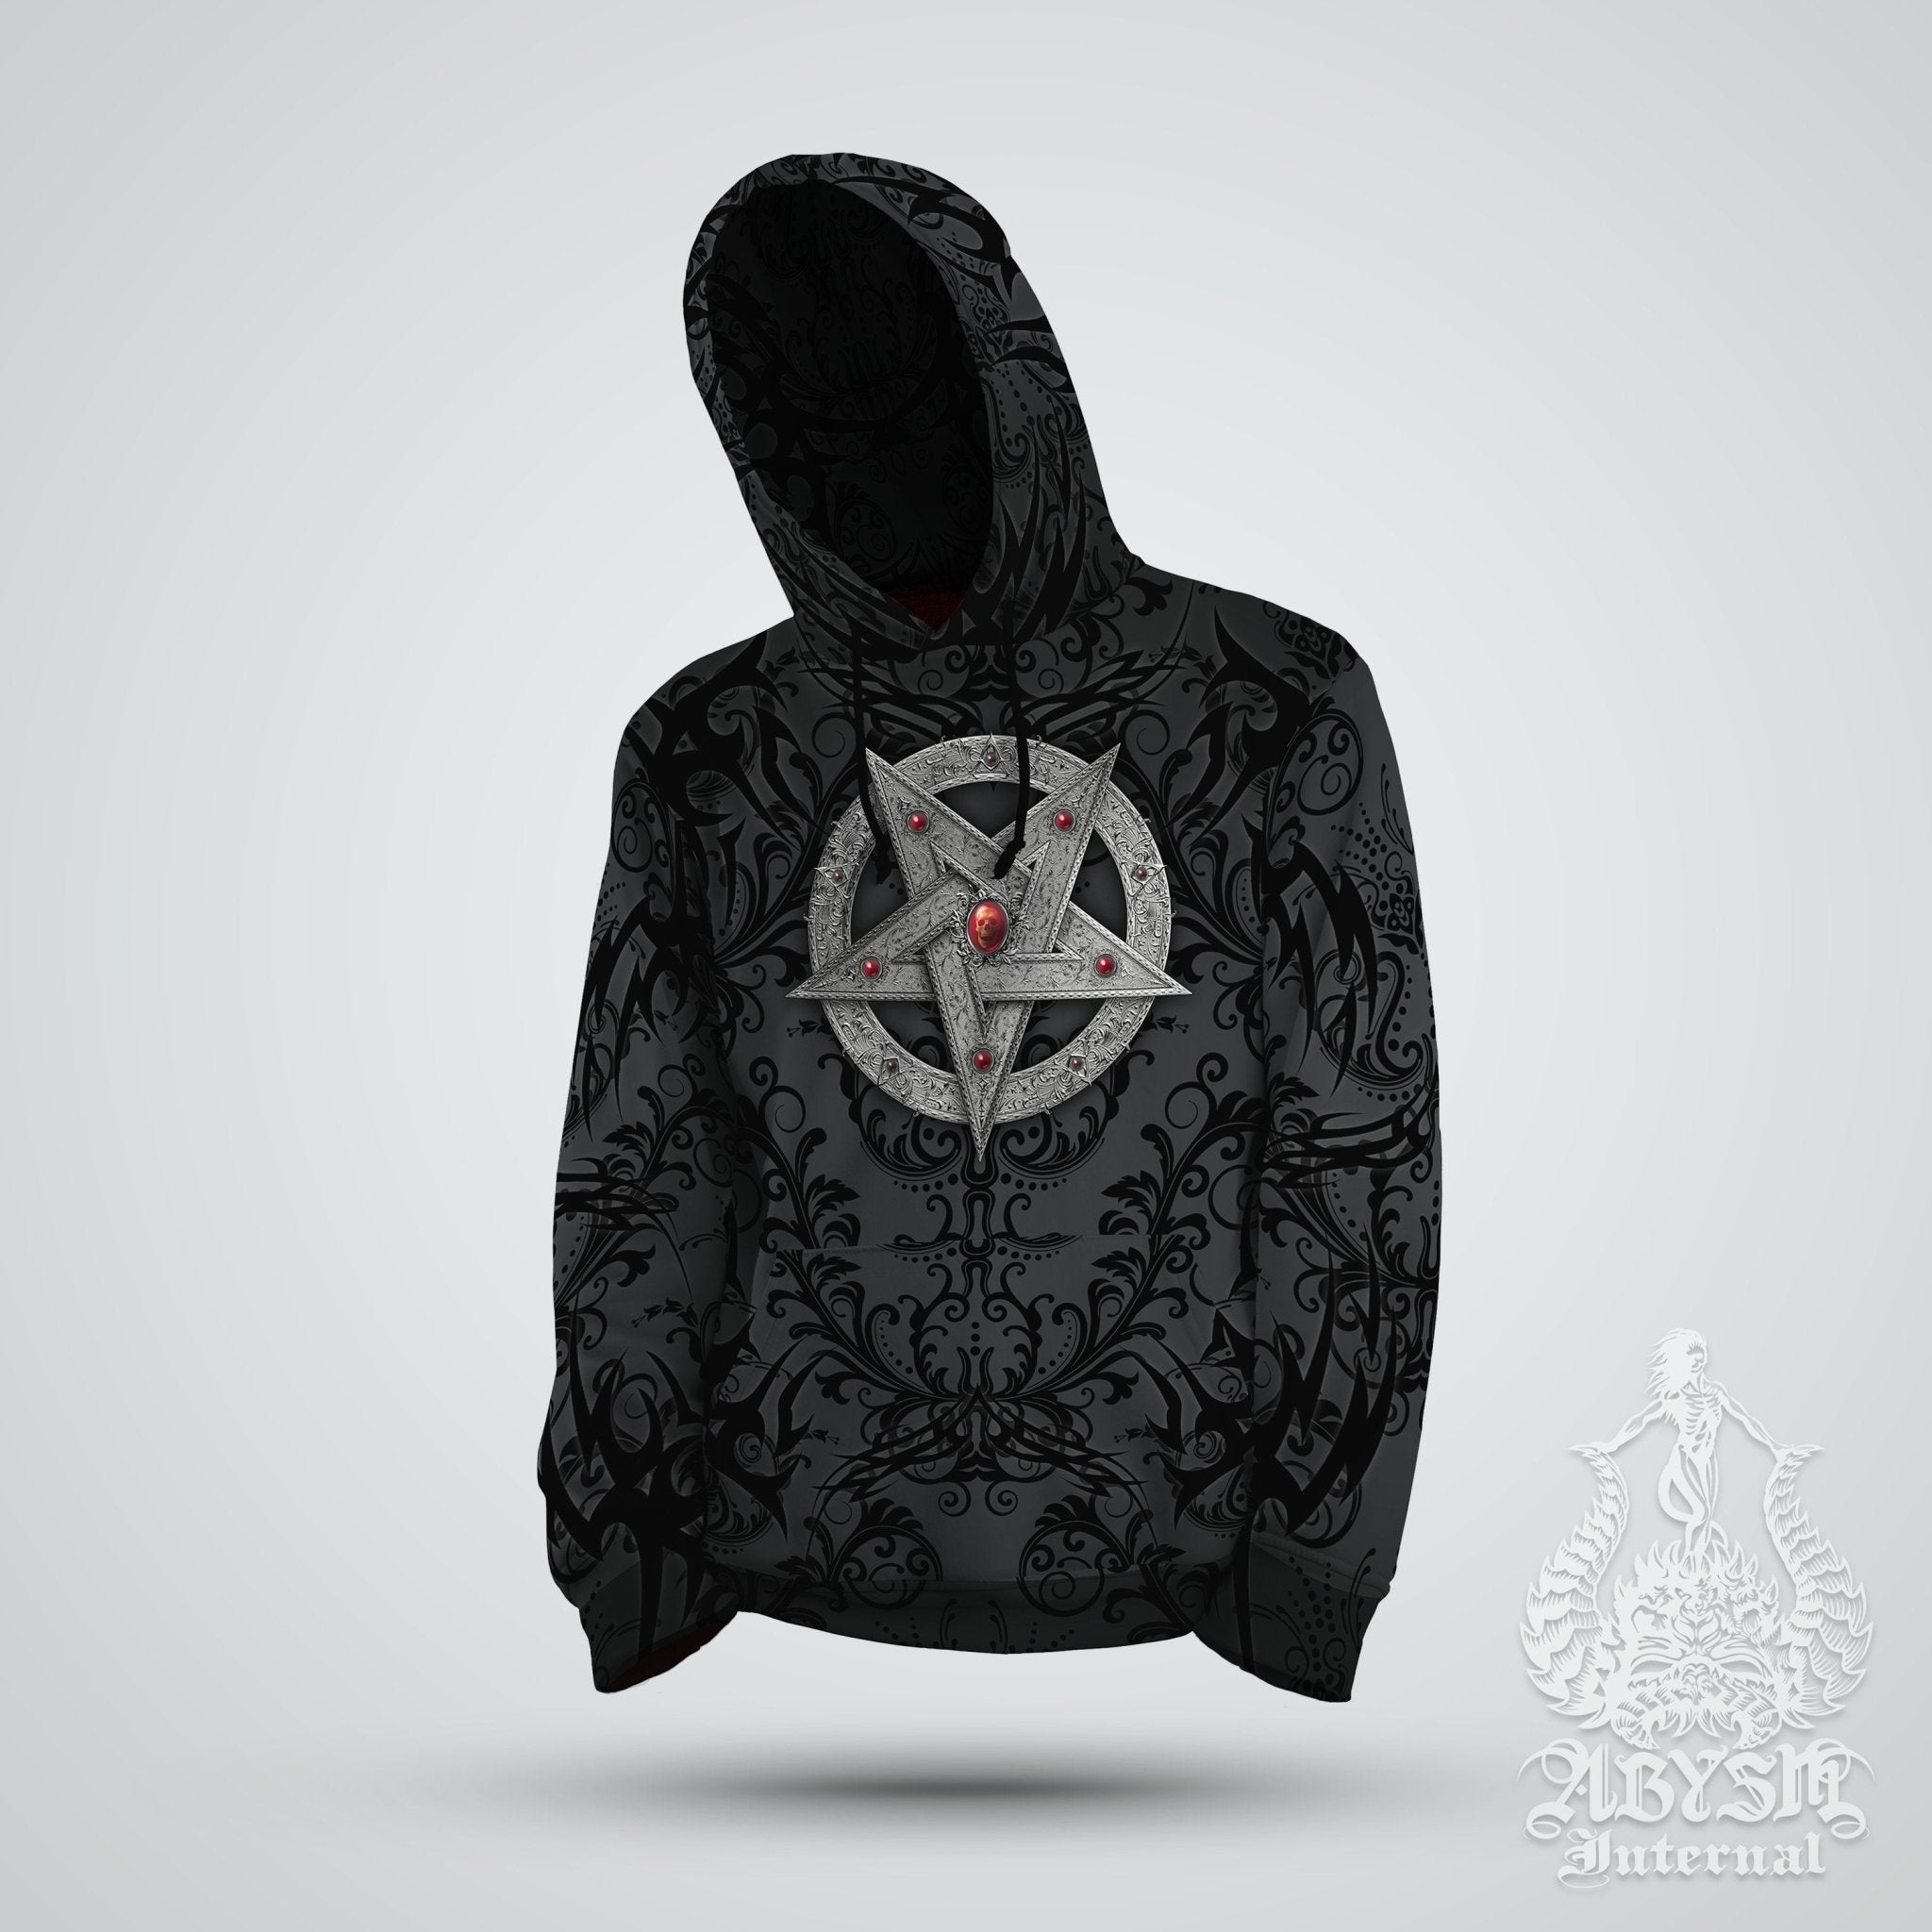 Pentagram Hoodie, Black Metal Streetwear, Gothic Sweater, Satanic Goth, Alternative Clothing, Unisex - Silver Black - Abysm Internal